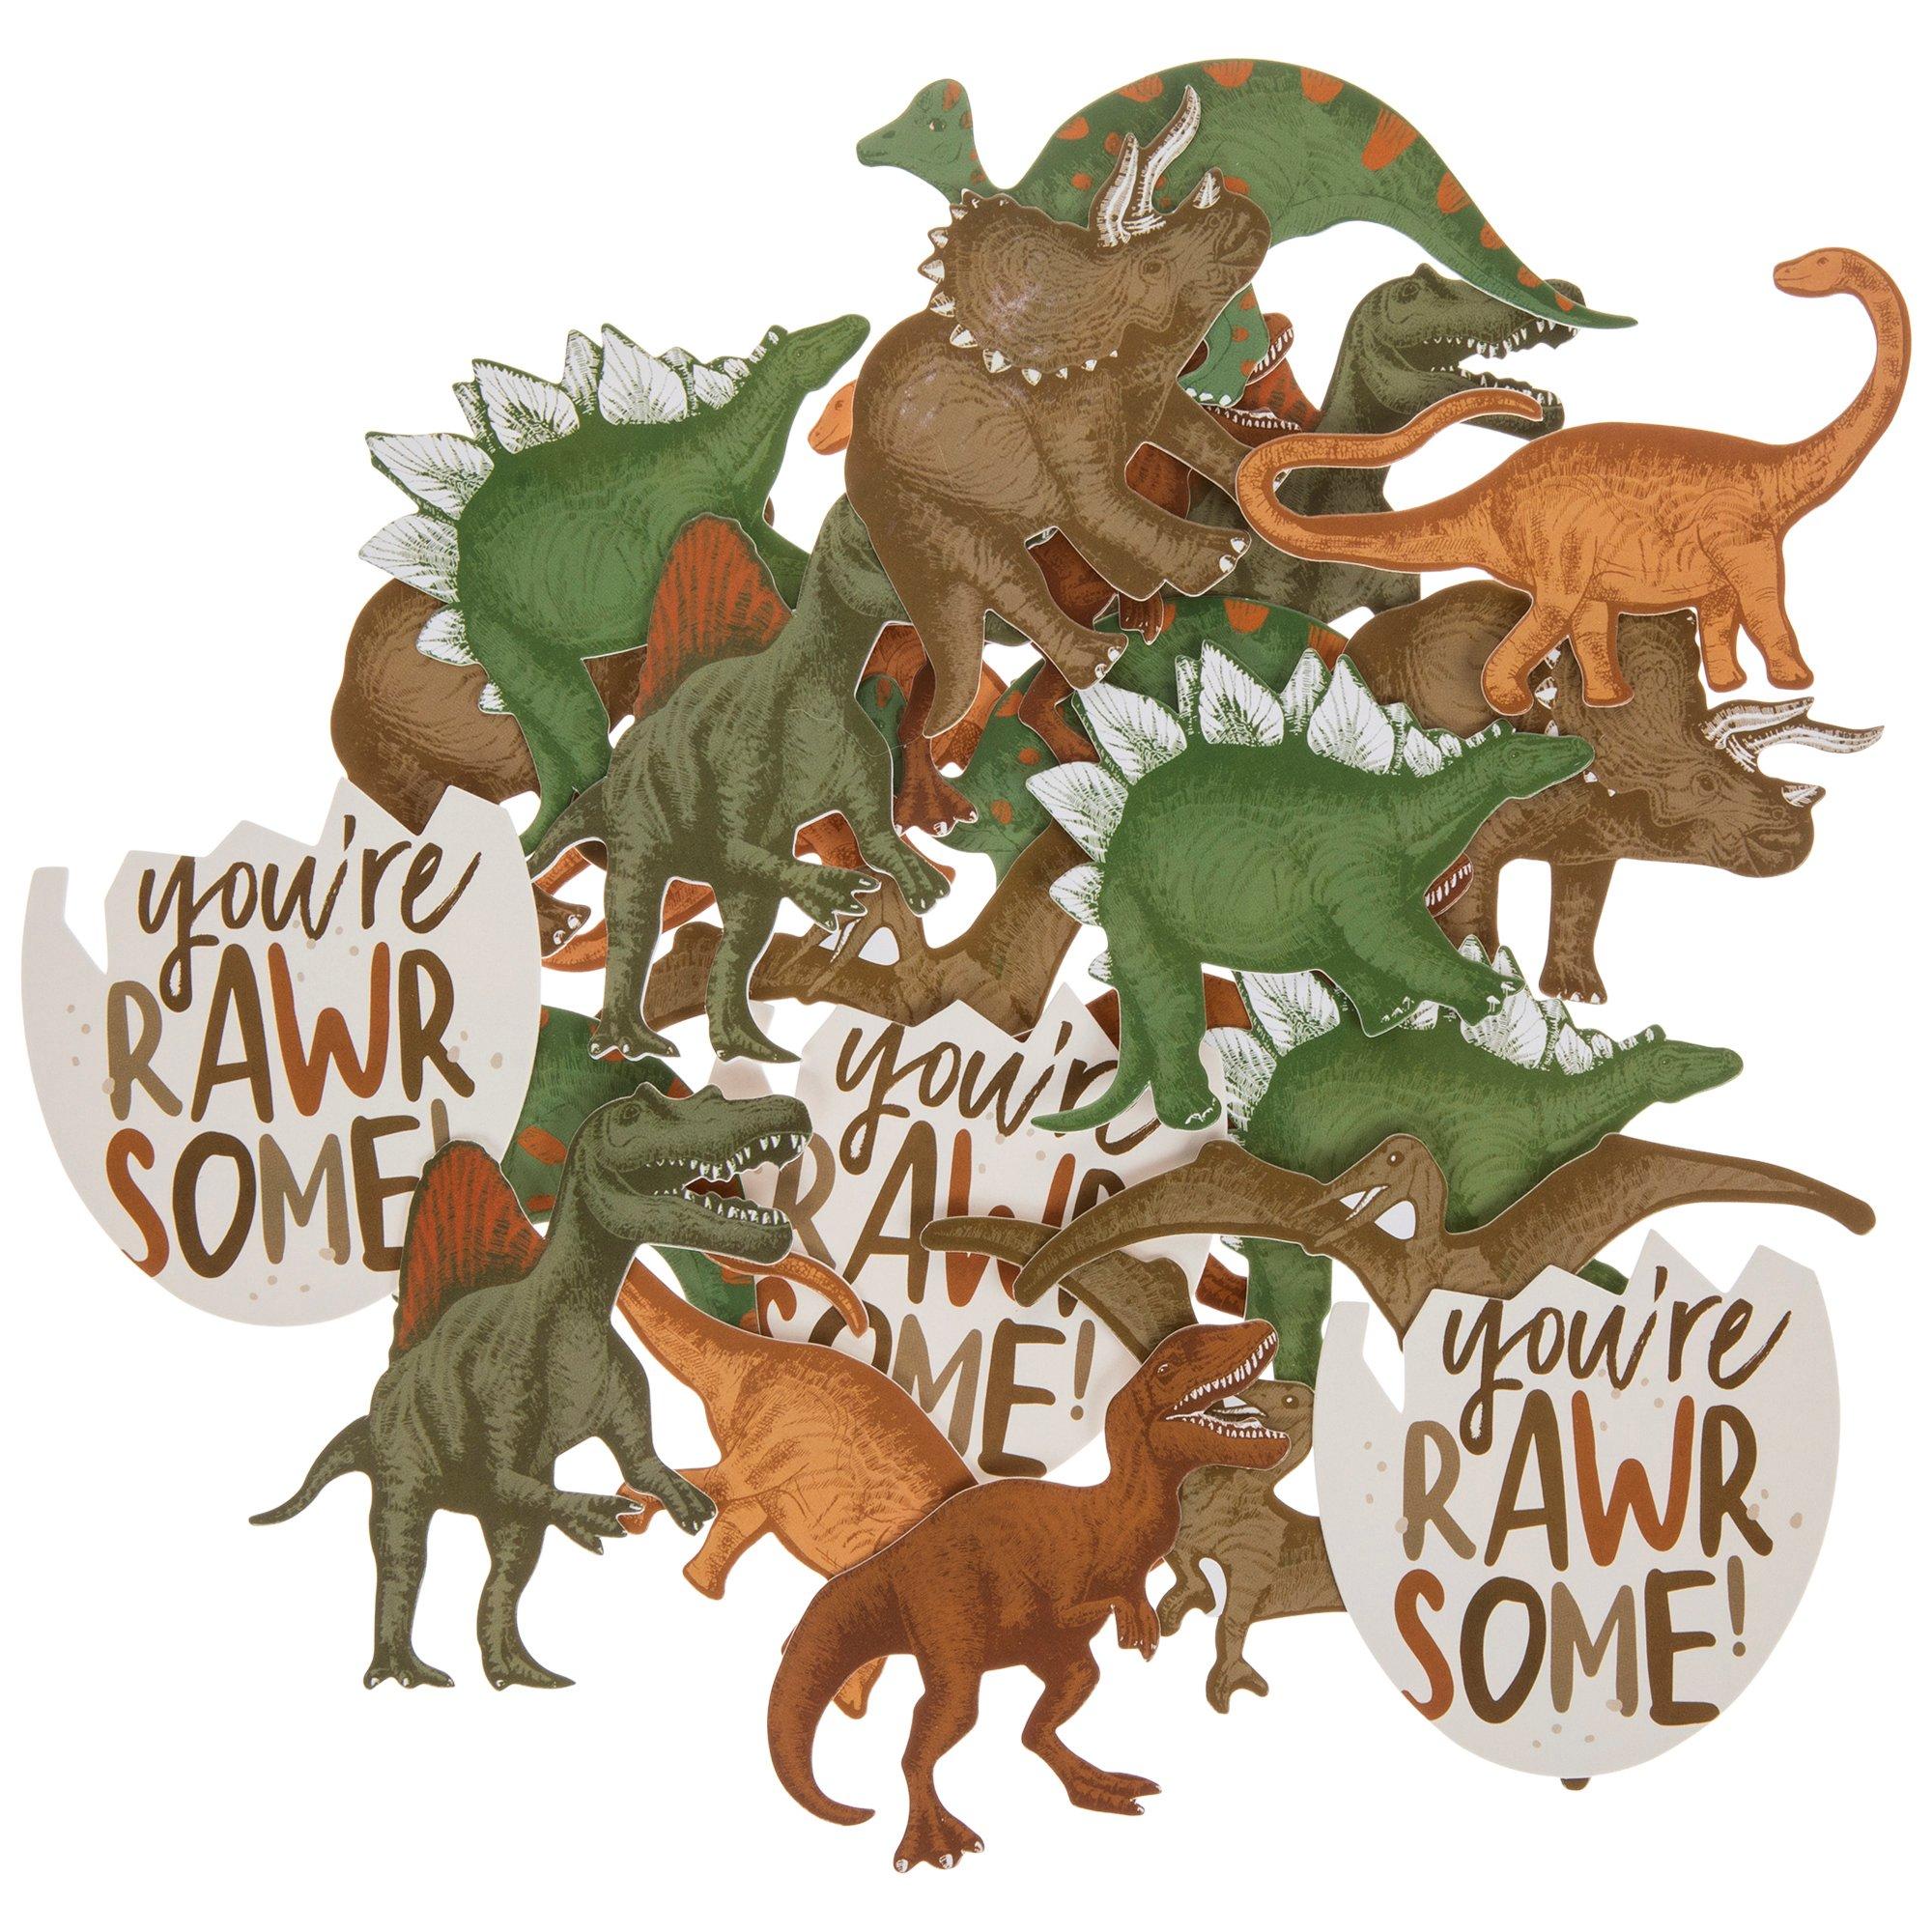 Jurassic World Puffy Stickers